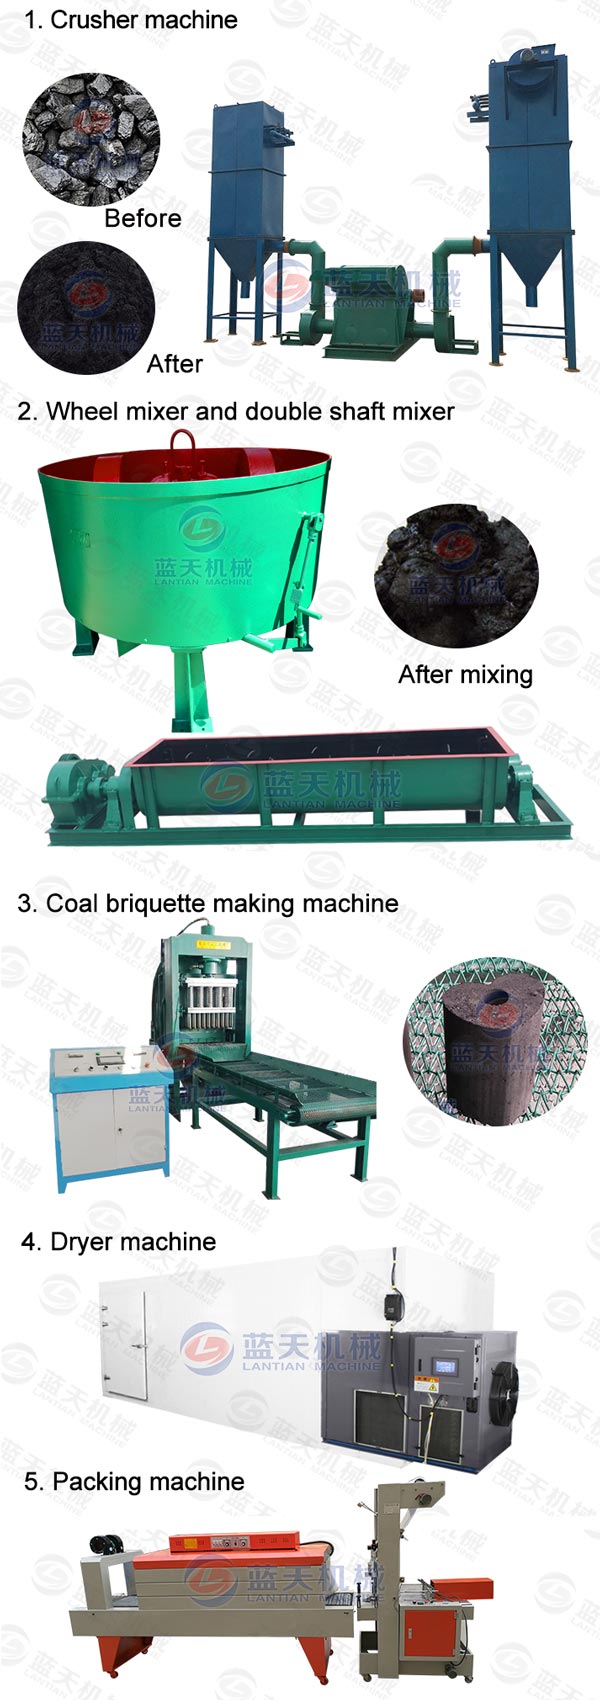 Product line of coal briquette making machine